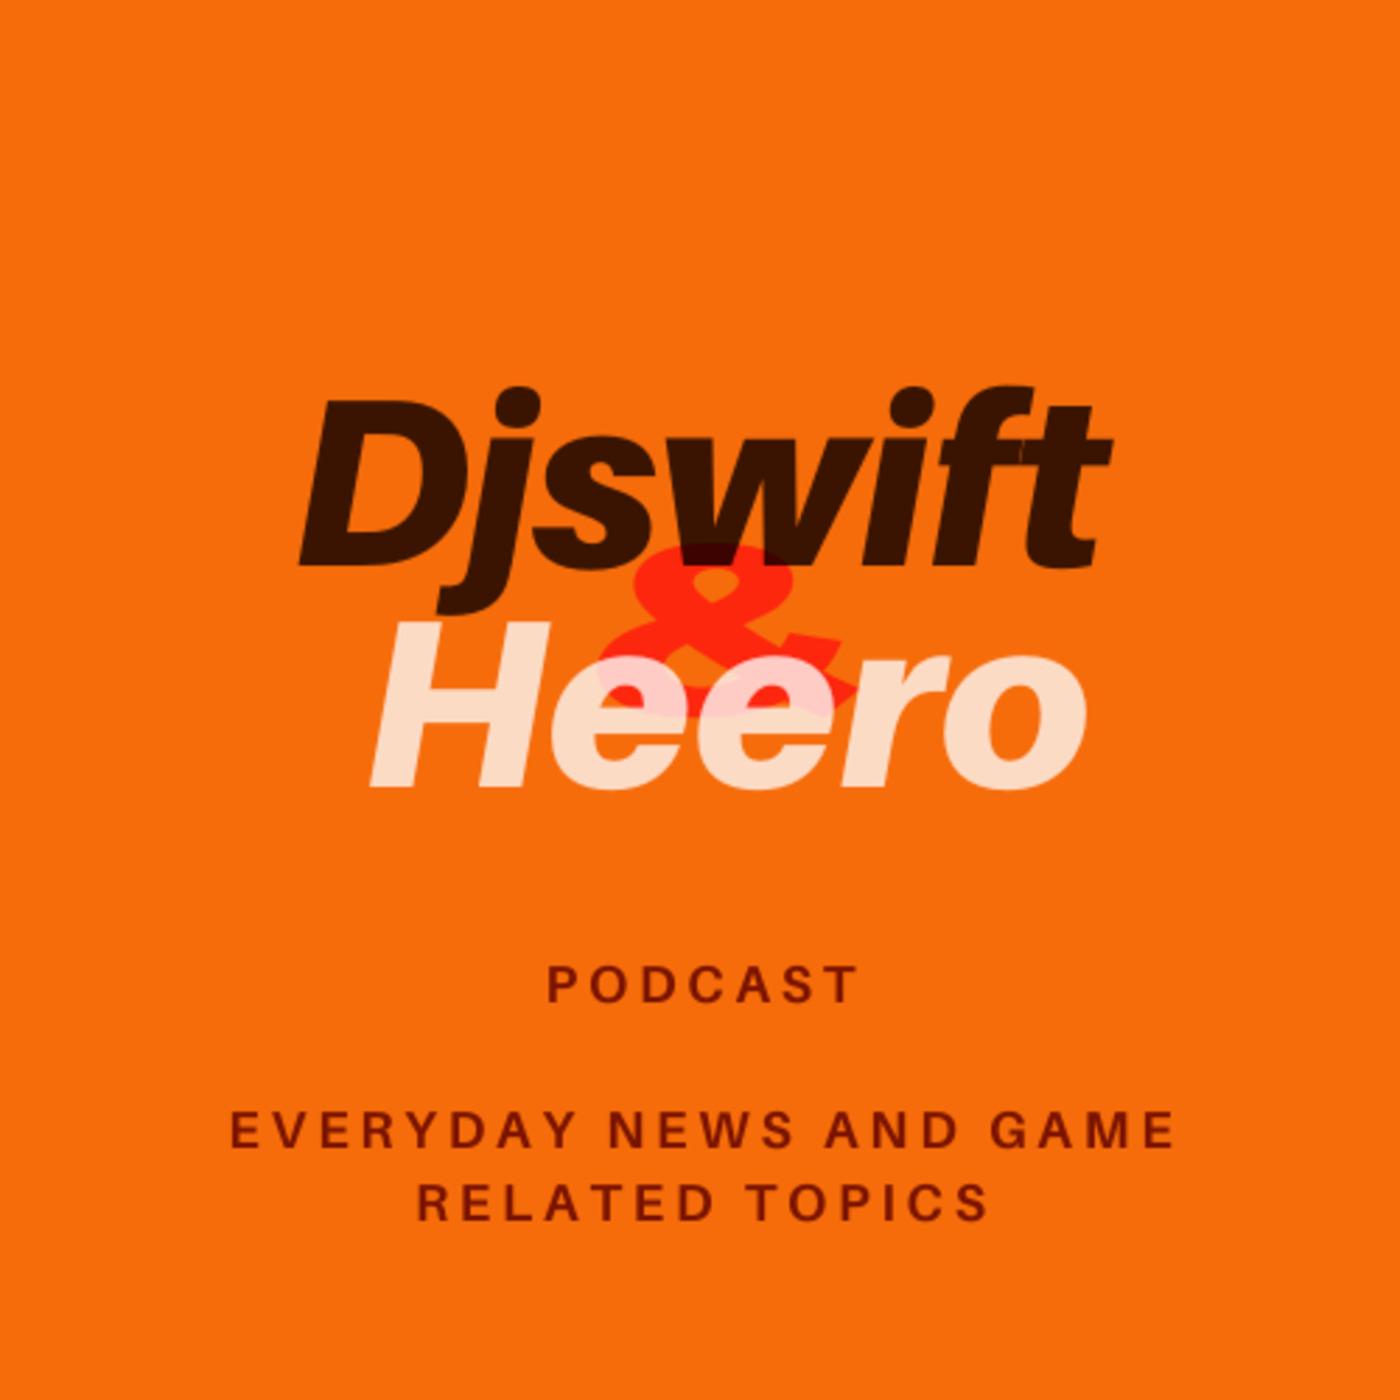 Djswift&Heero Podcast